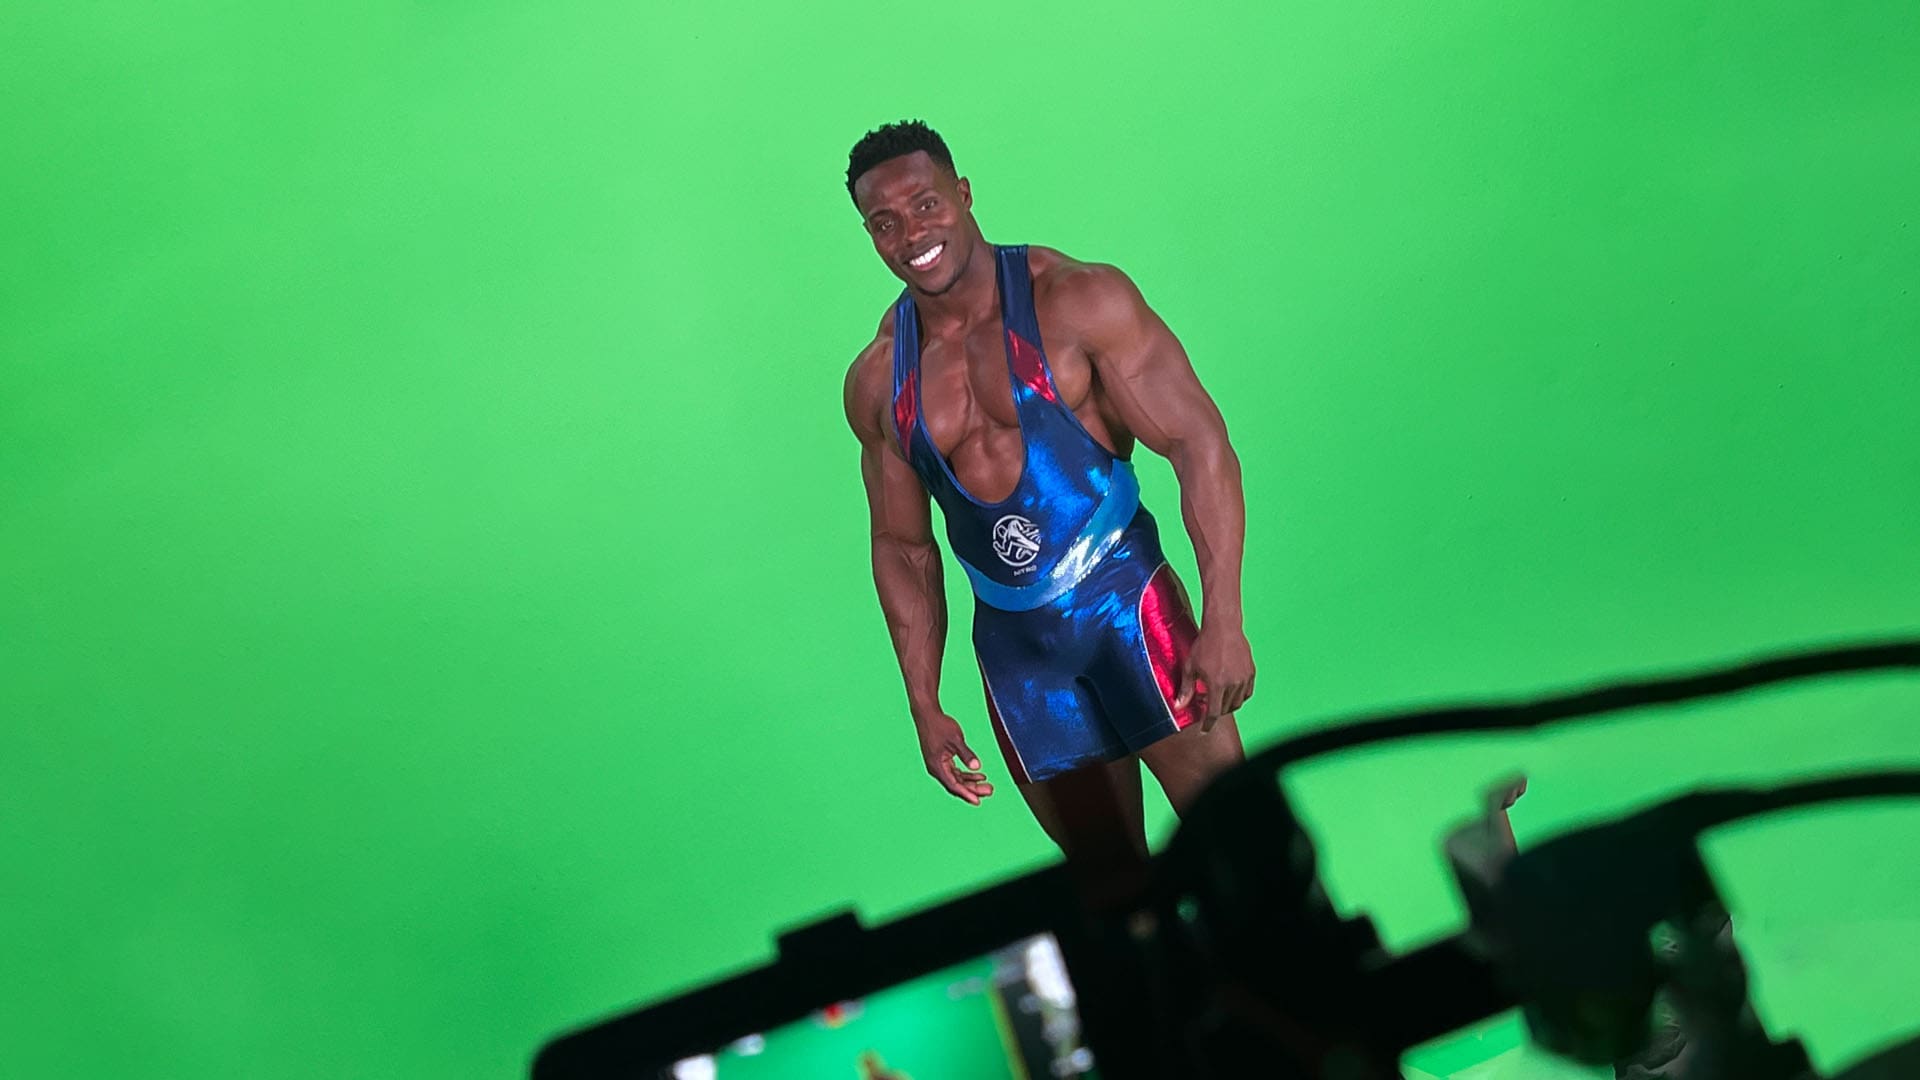 Nitro Gladiators behind the scenes filming of Gladiators opening titles image